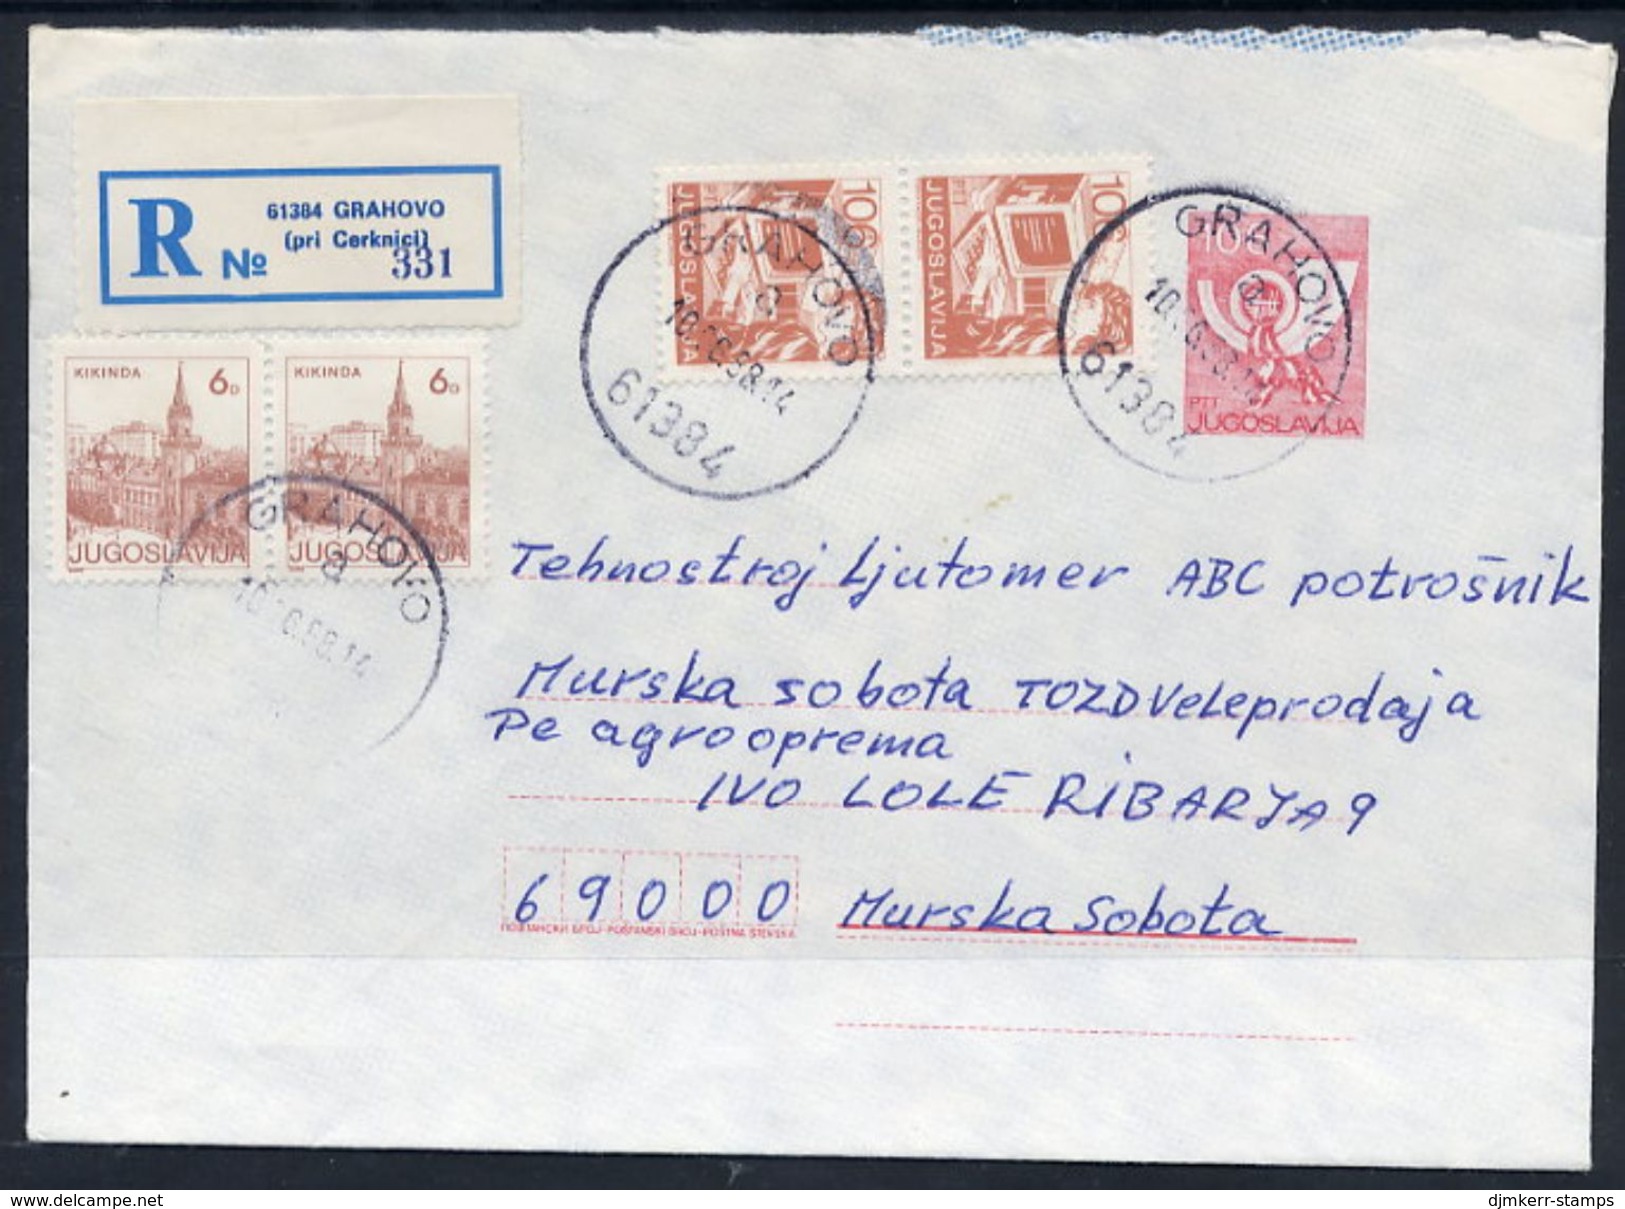 YUGOSLAVIA 1987 Posthorn 106 D.stationery Envelope Registered With Additional Franking.  Michel U80 - Interi Postali